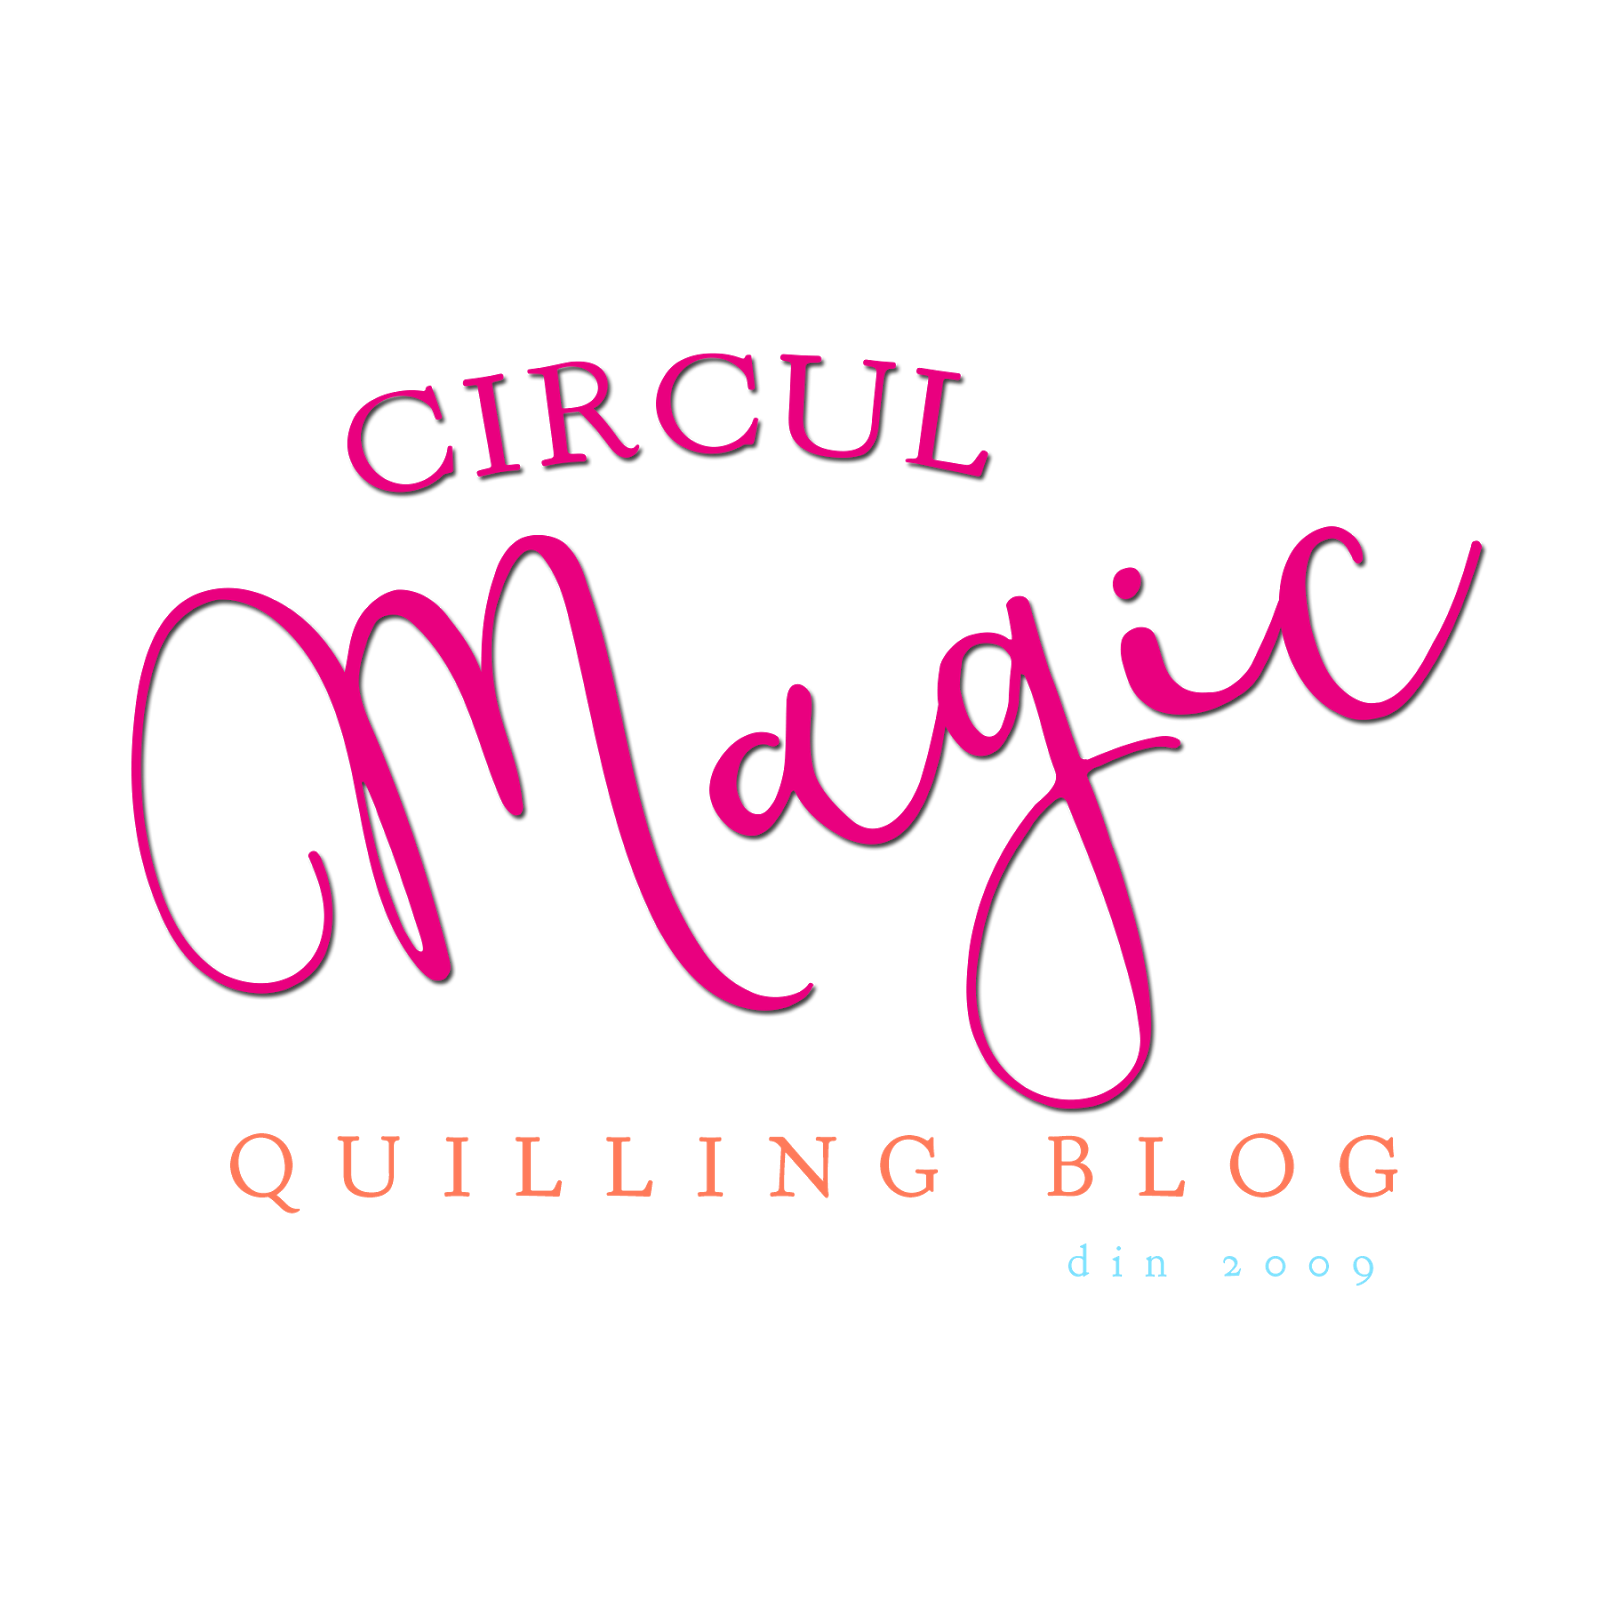 Un nou logo pentru Circul Magic, Quilling Blog